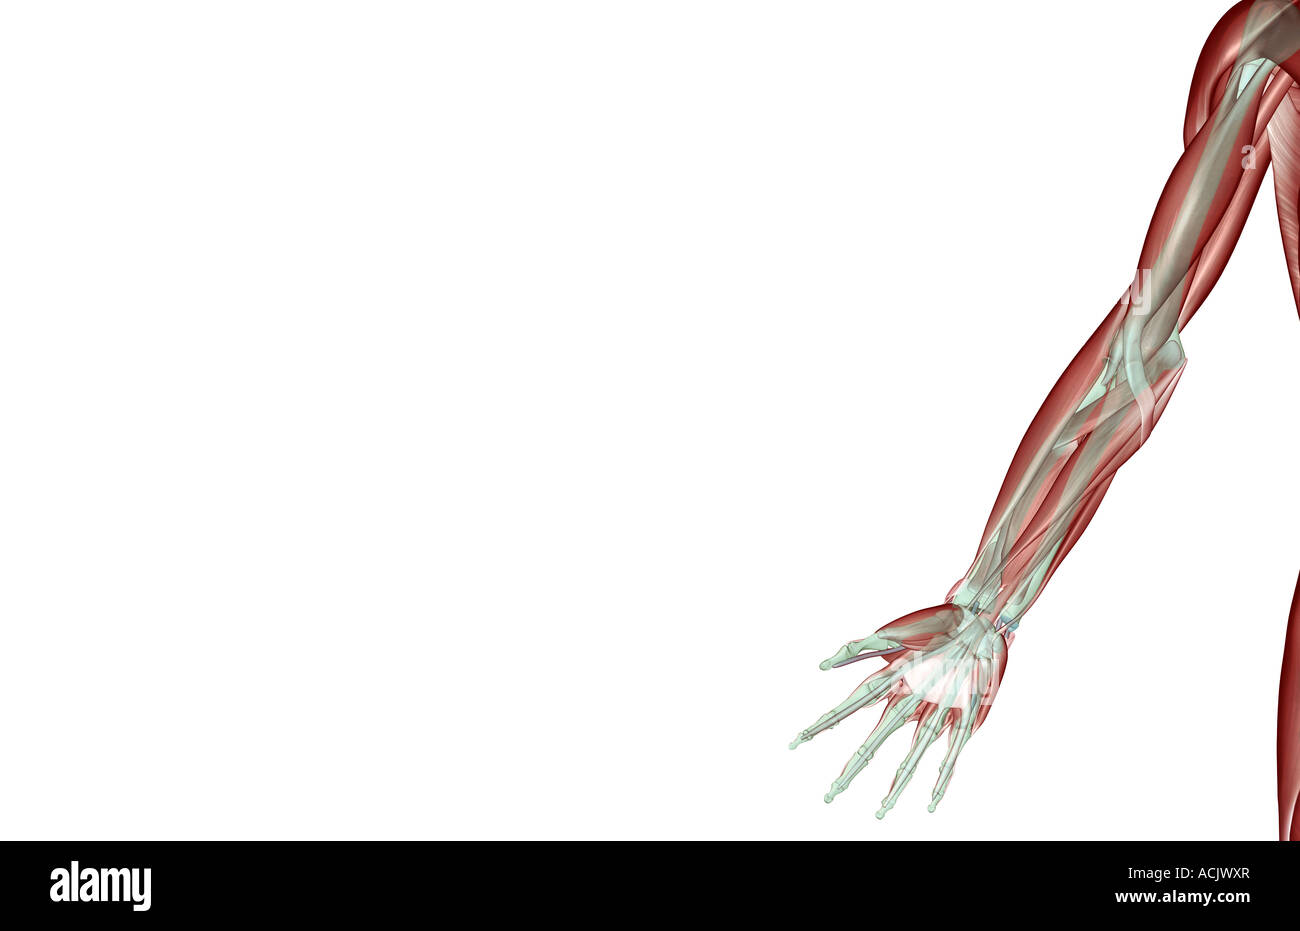 Upper limb musculoskeleton Stock Photo